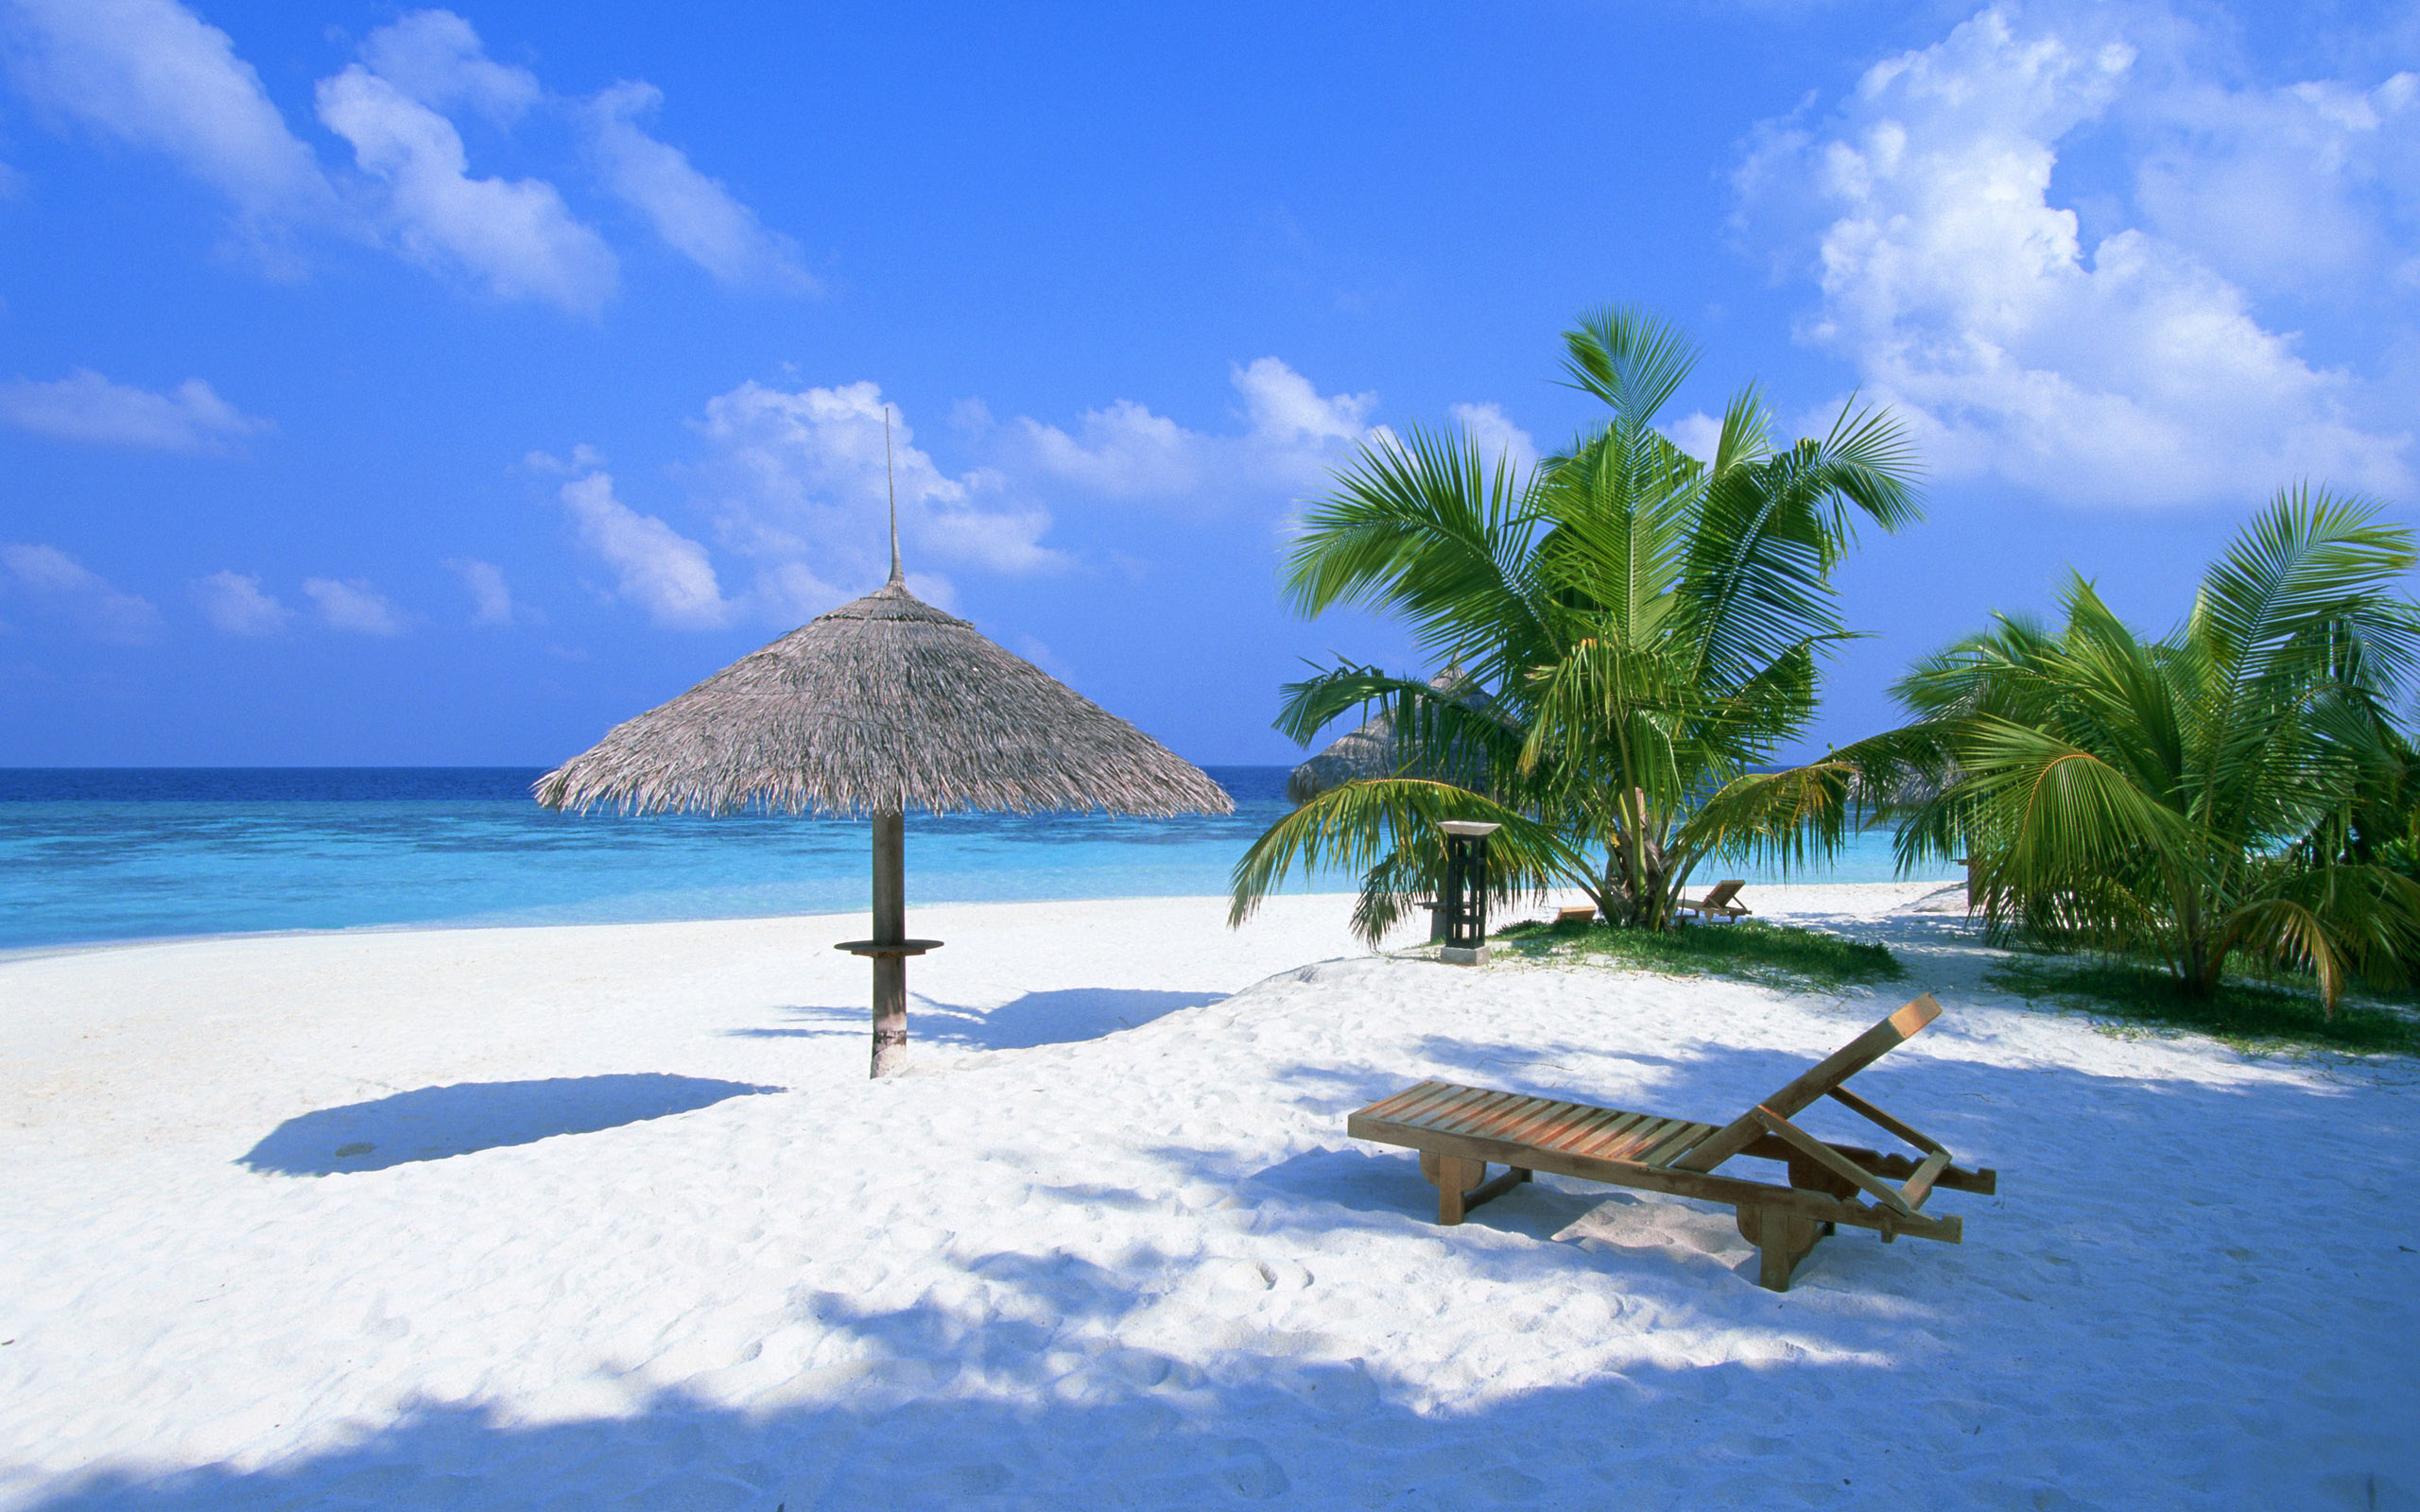 Maldives Paradise Island 2560x1600 HD Wallpapers pack 1   Photo 4 of